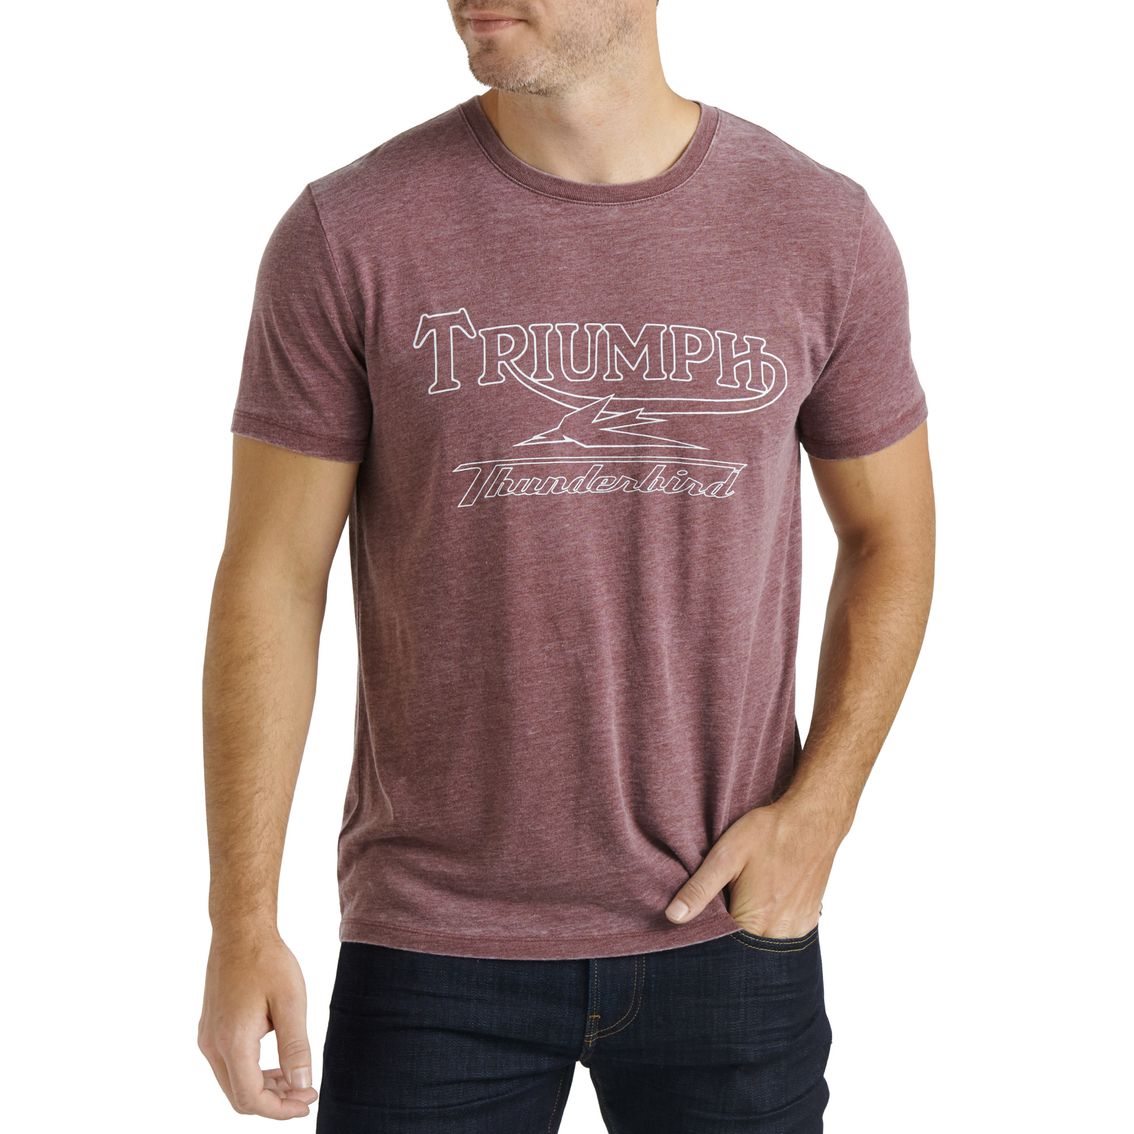 Lucky Brand Triumph Thunderbird Tee, Shirts